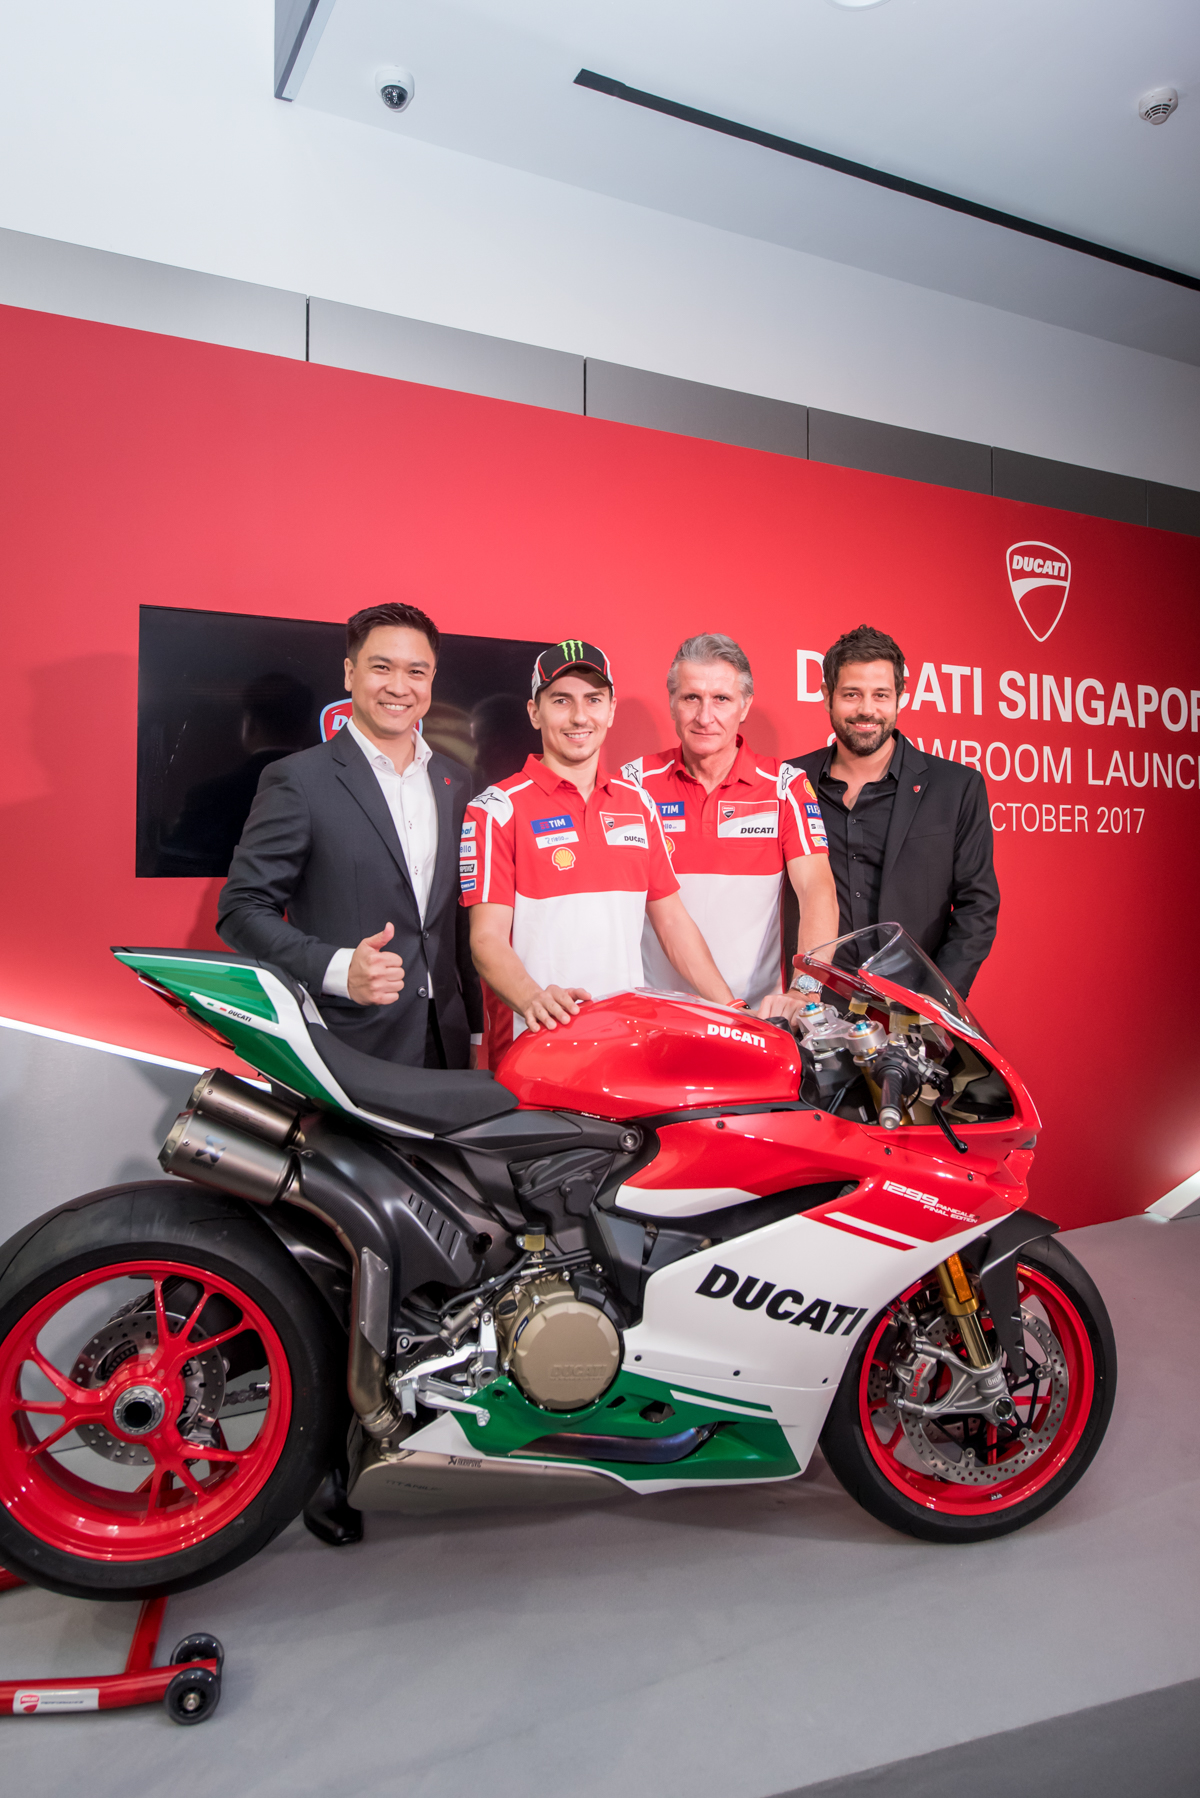 9tro-new-ducati-singapore-showroom-launch-6.jpg